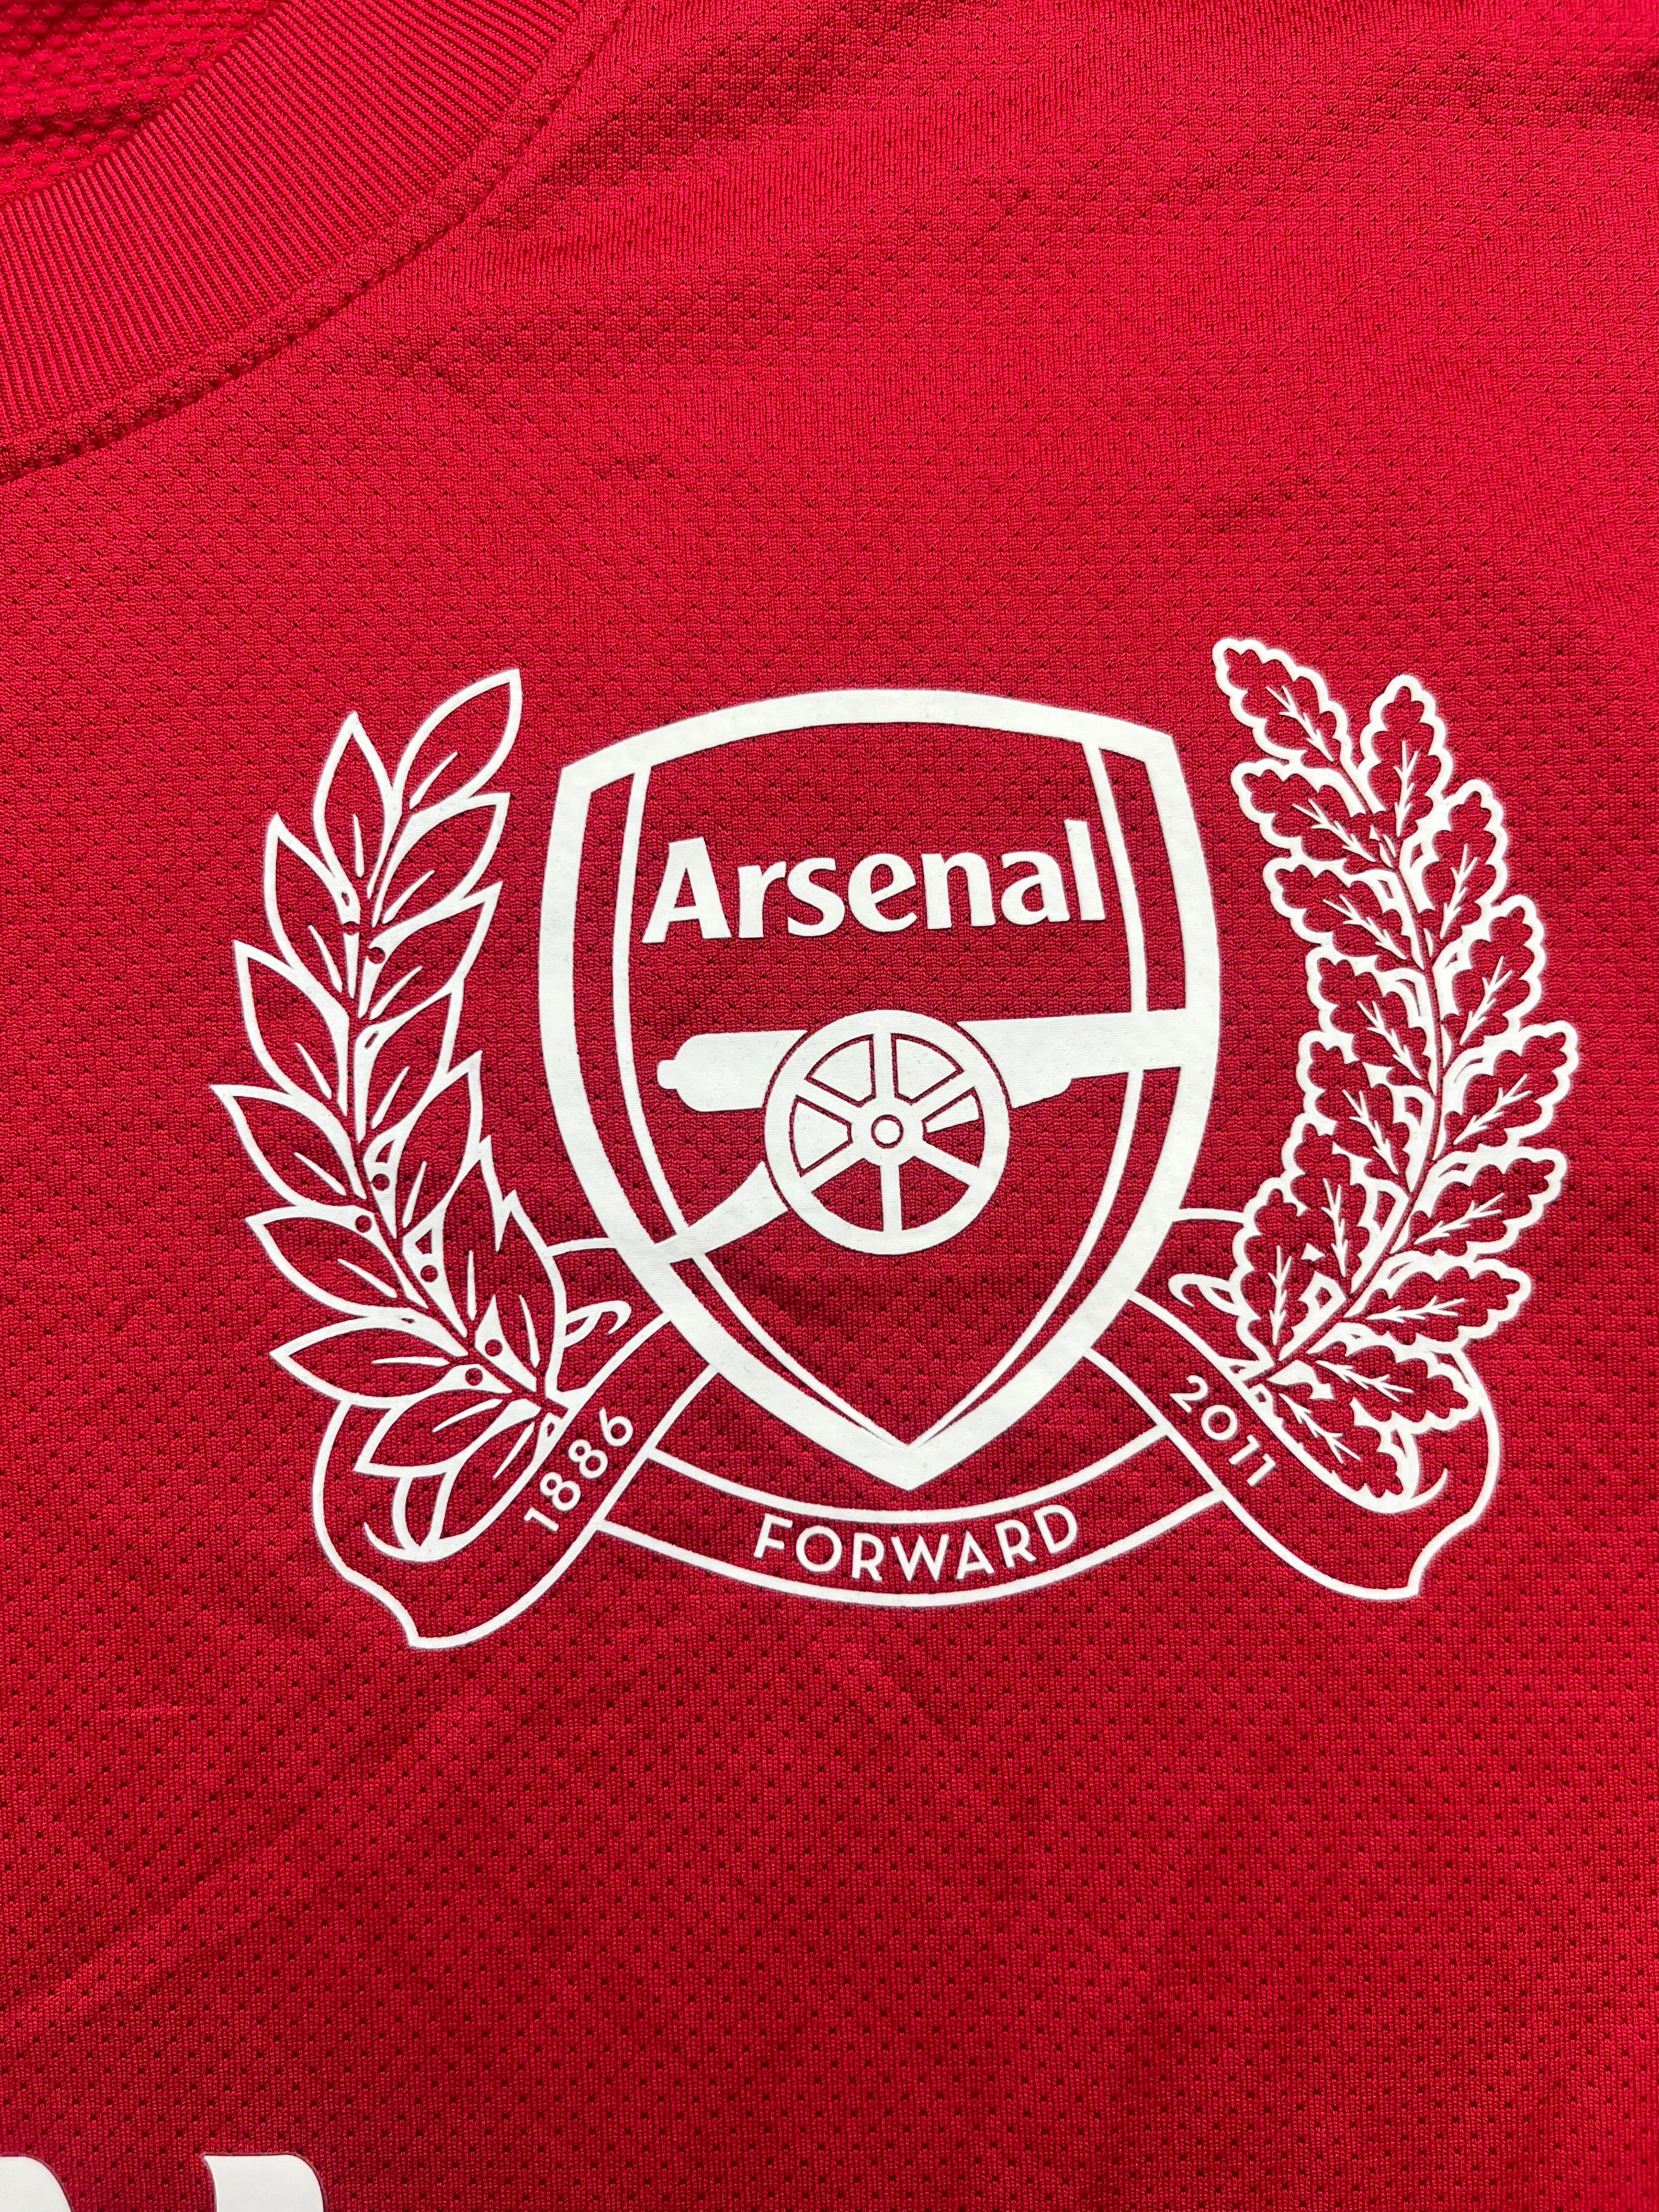 2011/12 Arsenal ‘125th Anniversary’ Home Shirt (M) 8.5/10